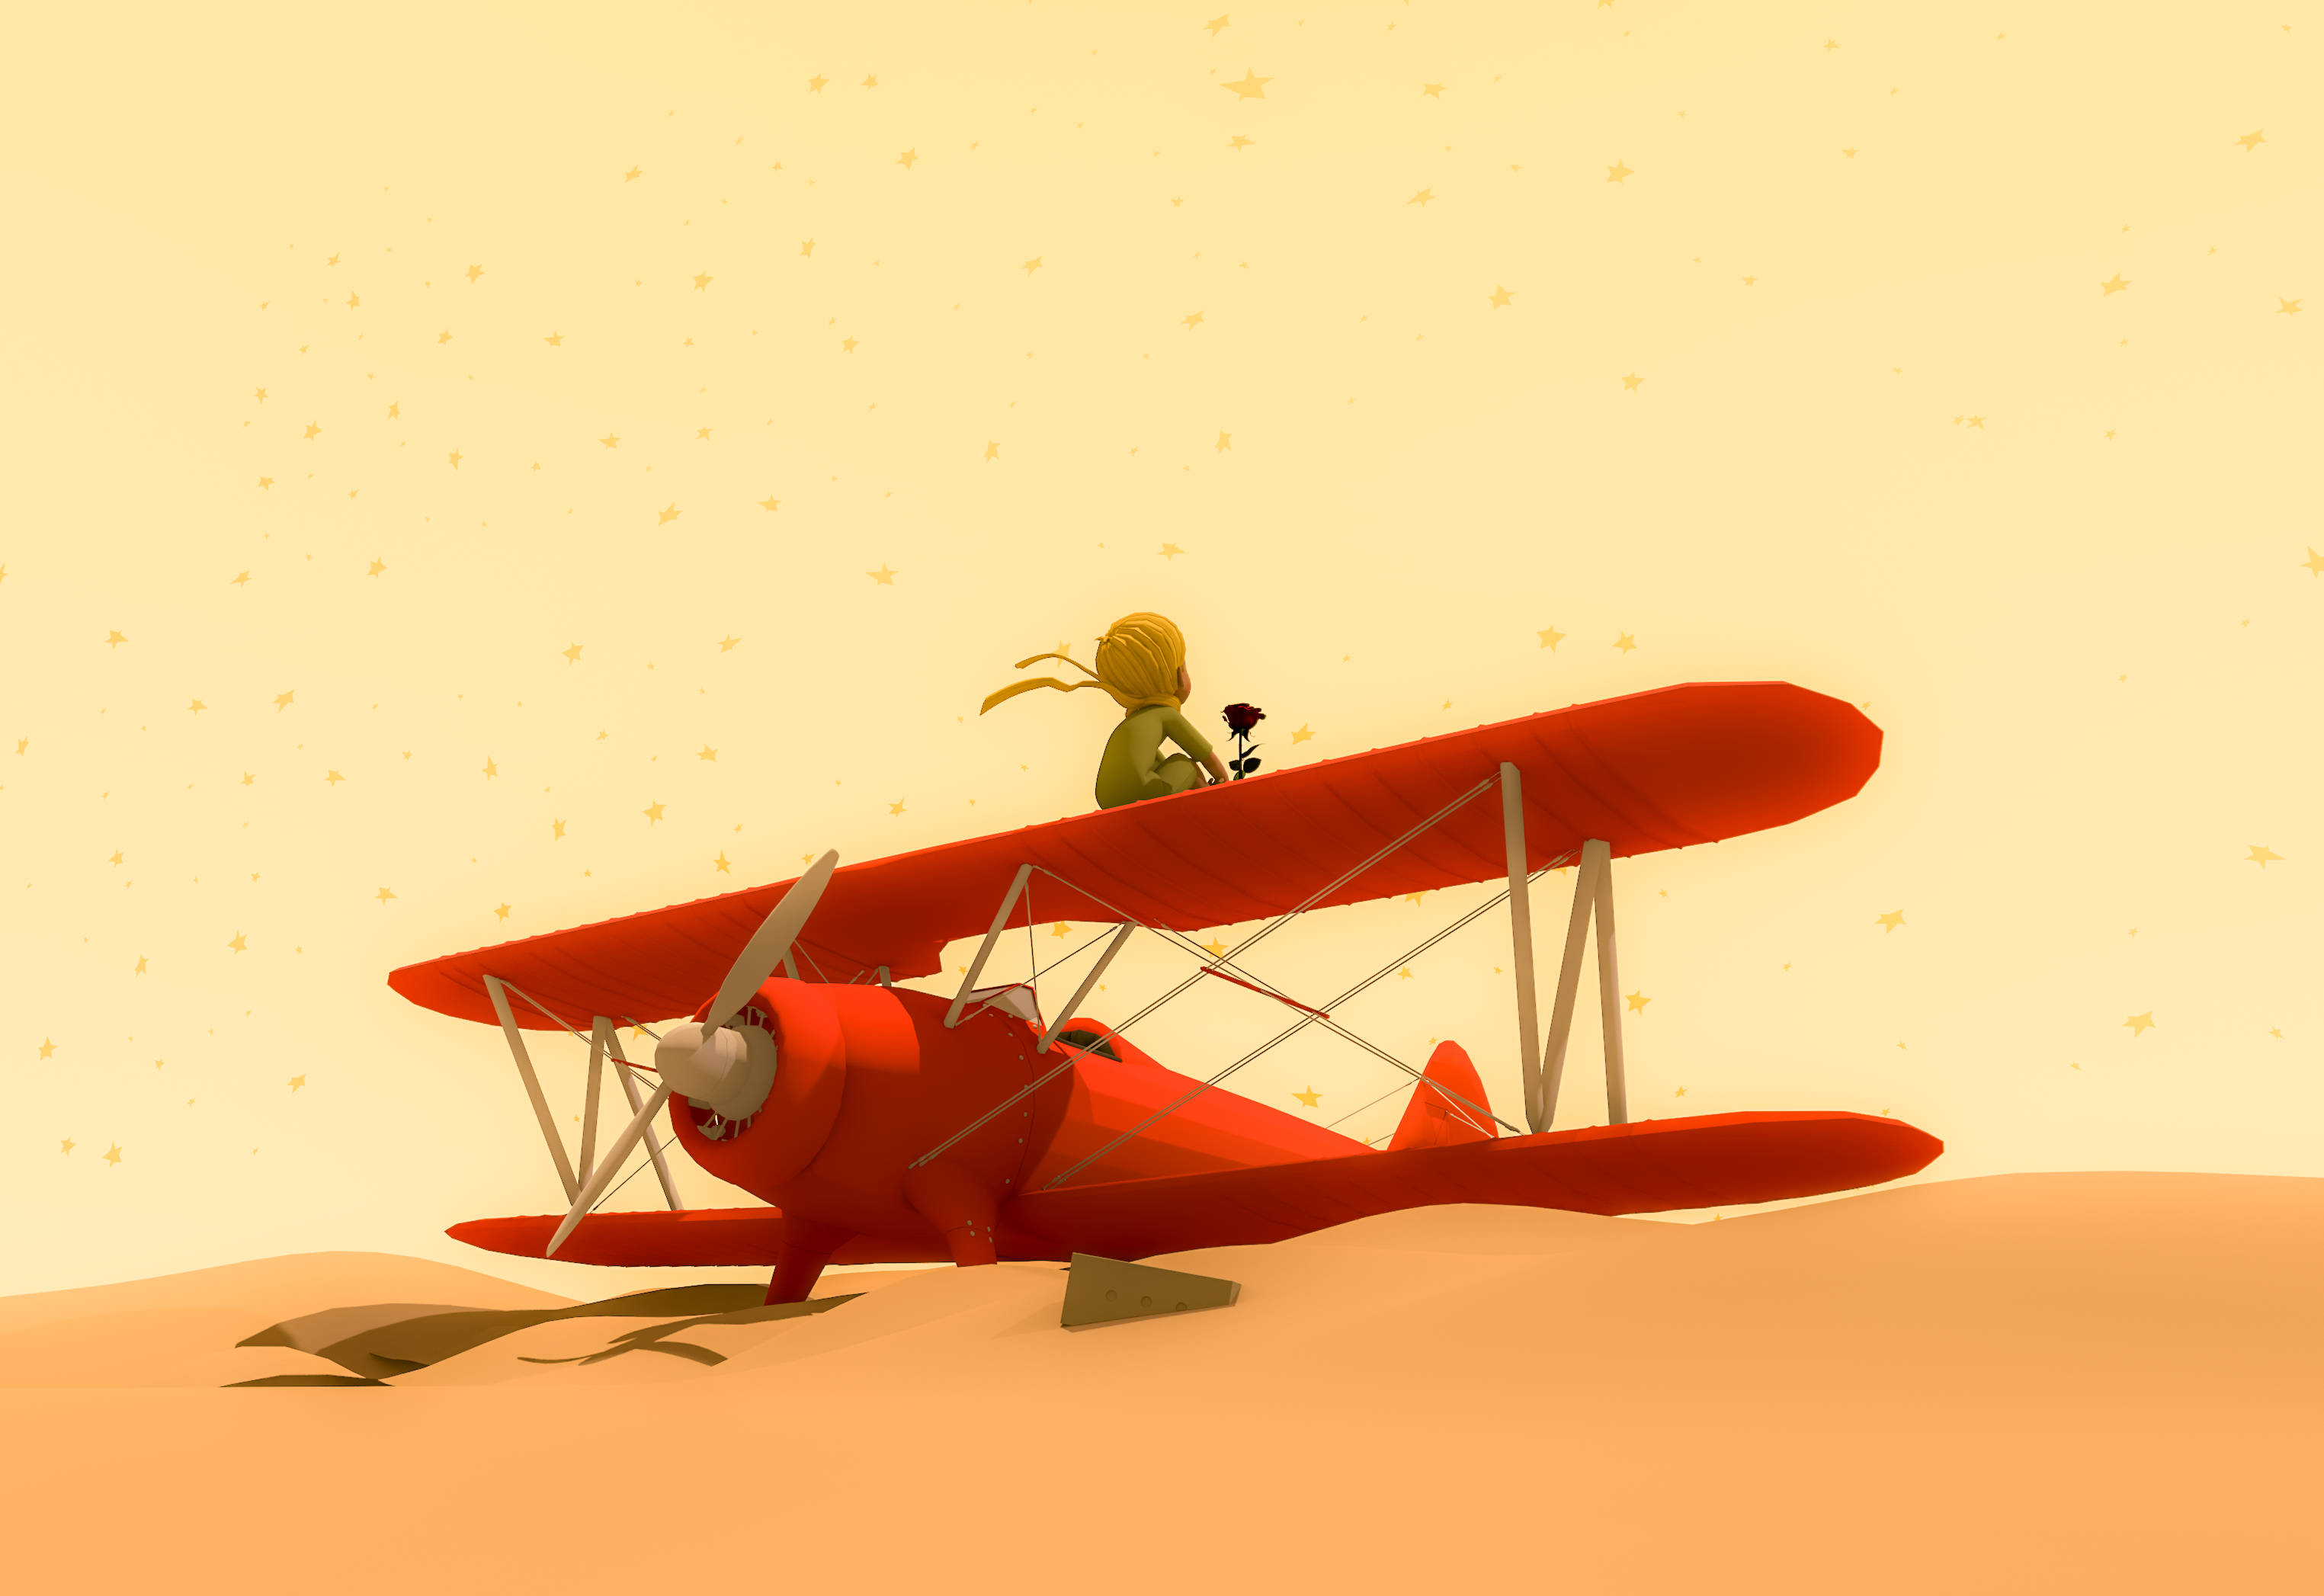 Screenshot 1 of Escape Game : Le Petit Prince 3.22.2.0